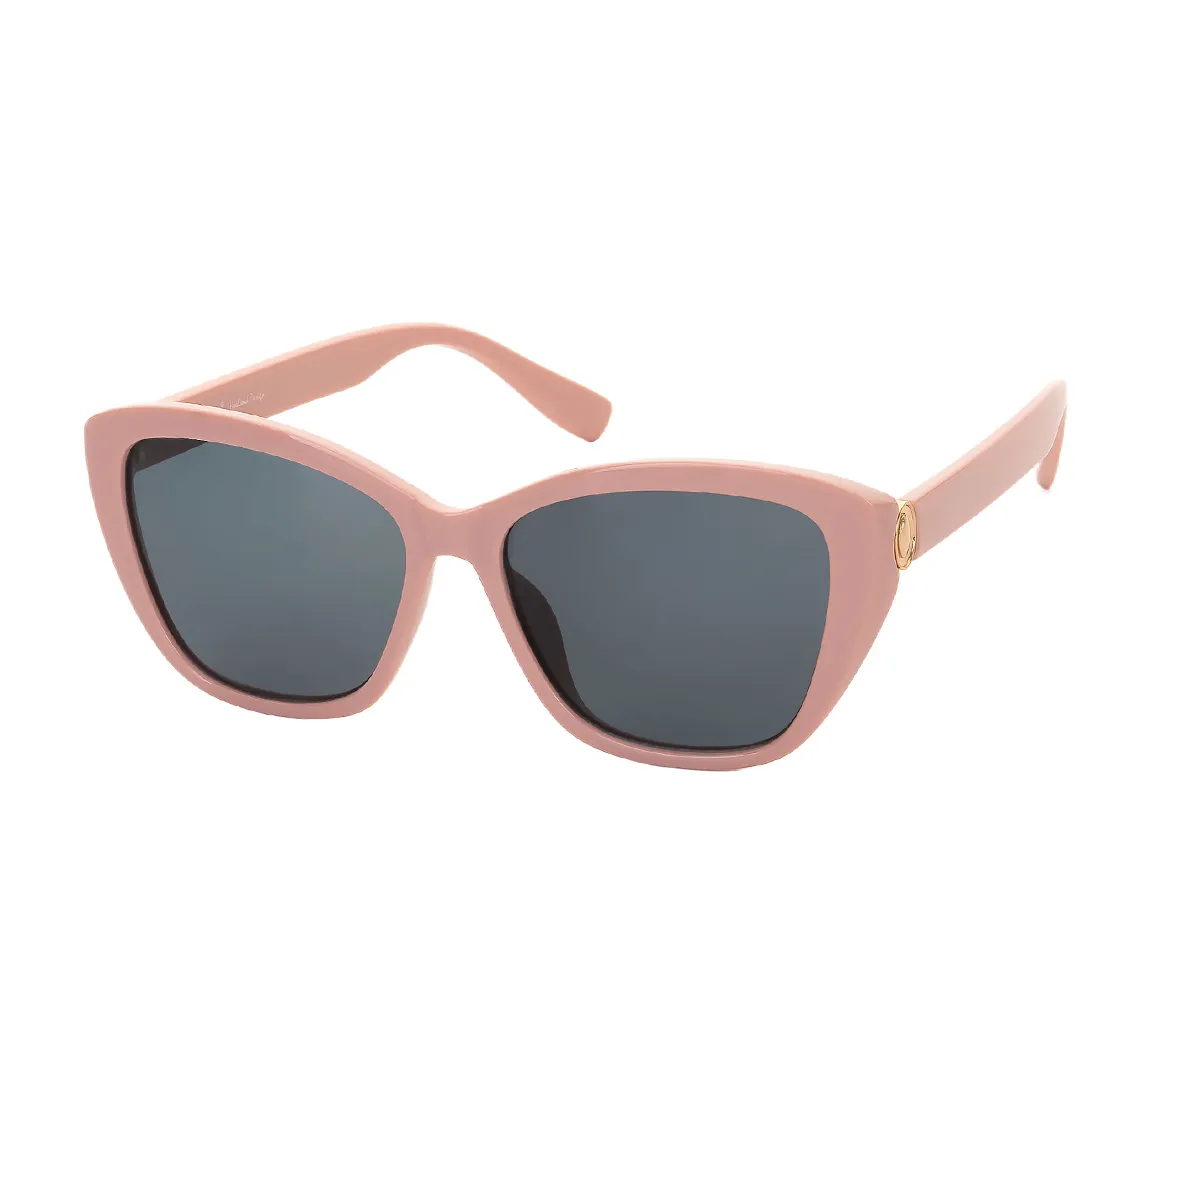 Berry - Cat-eye Pink Sunglasses for Women